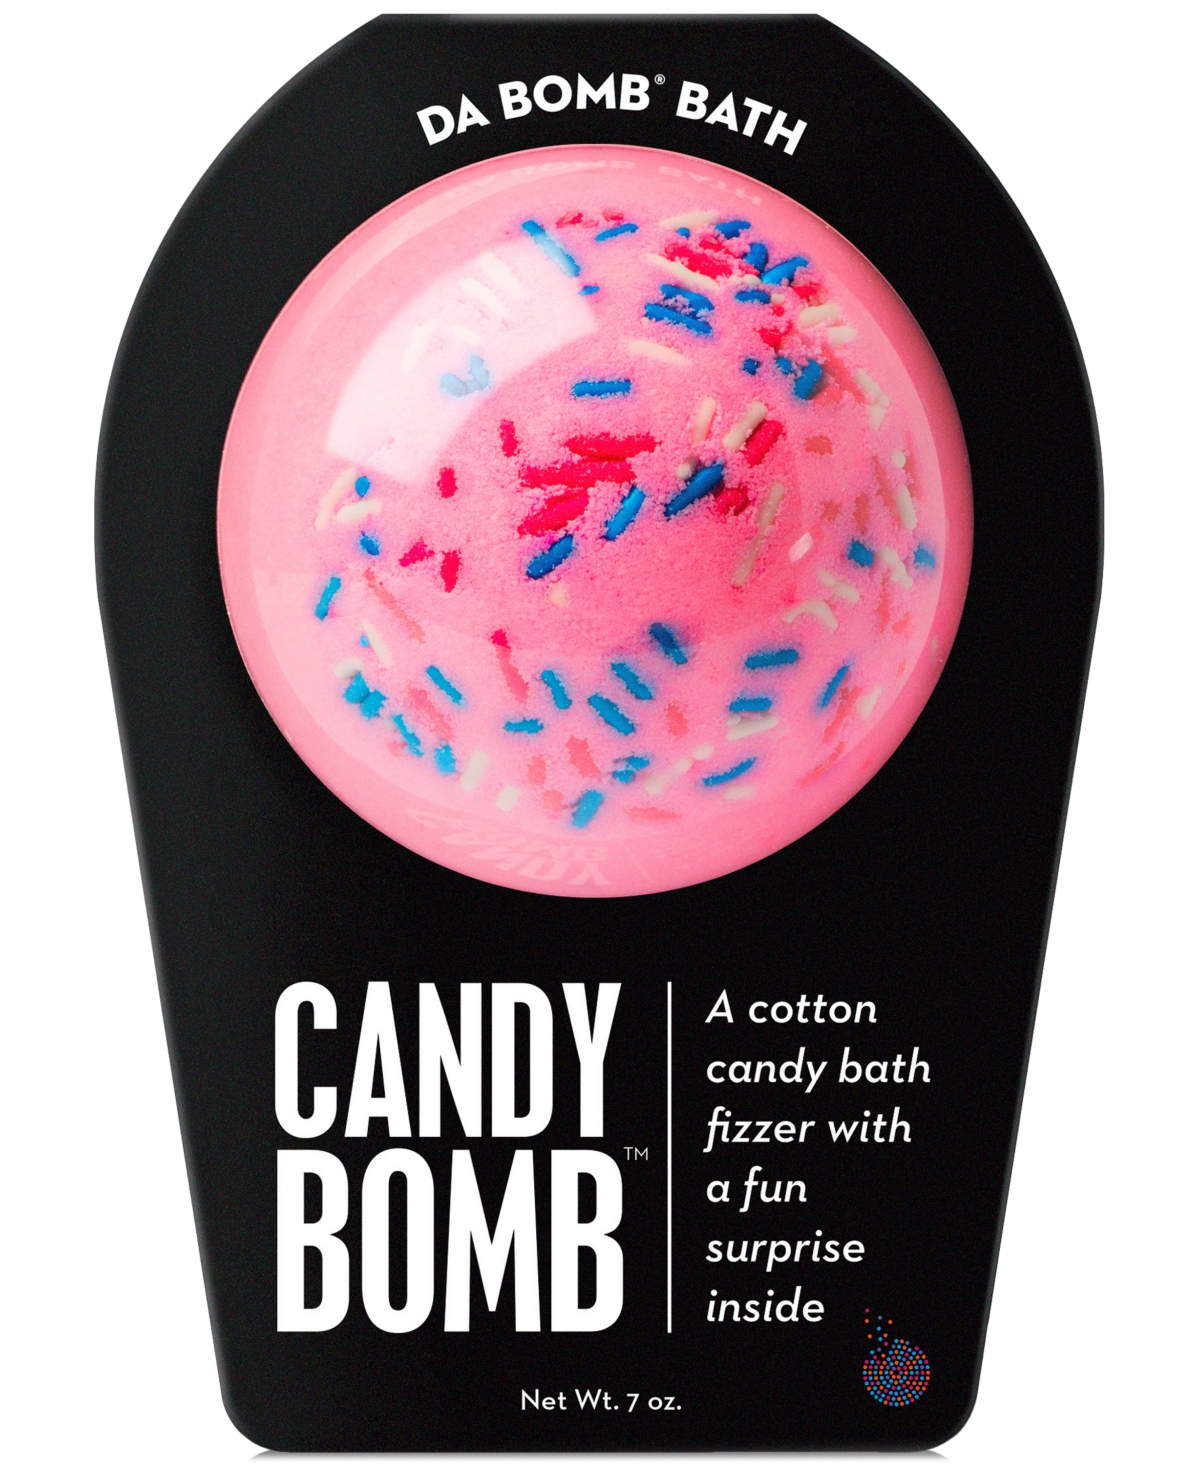 Candy Bath Bomb, 7 oz. - Candy Bomb